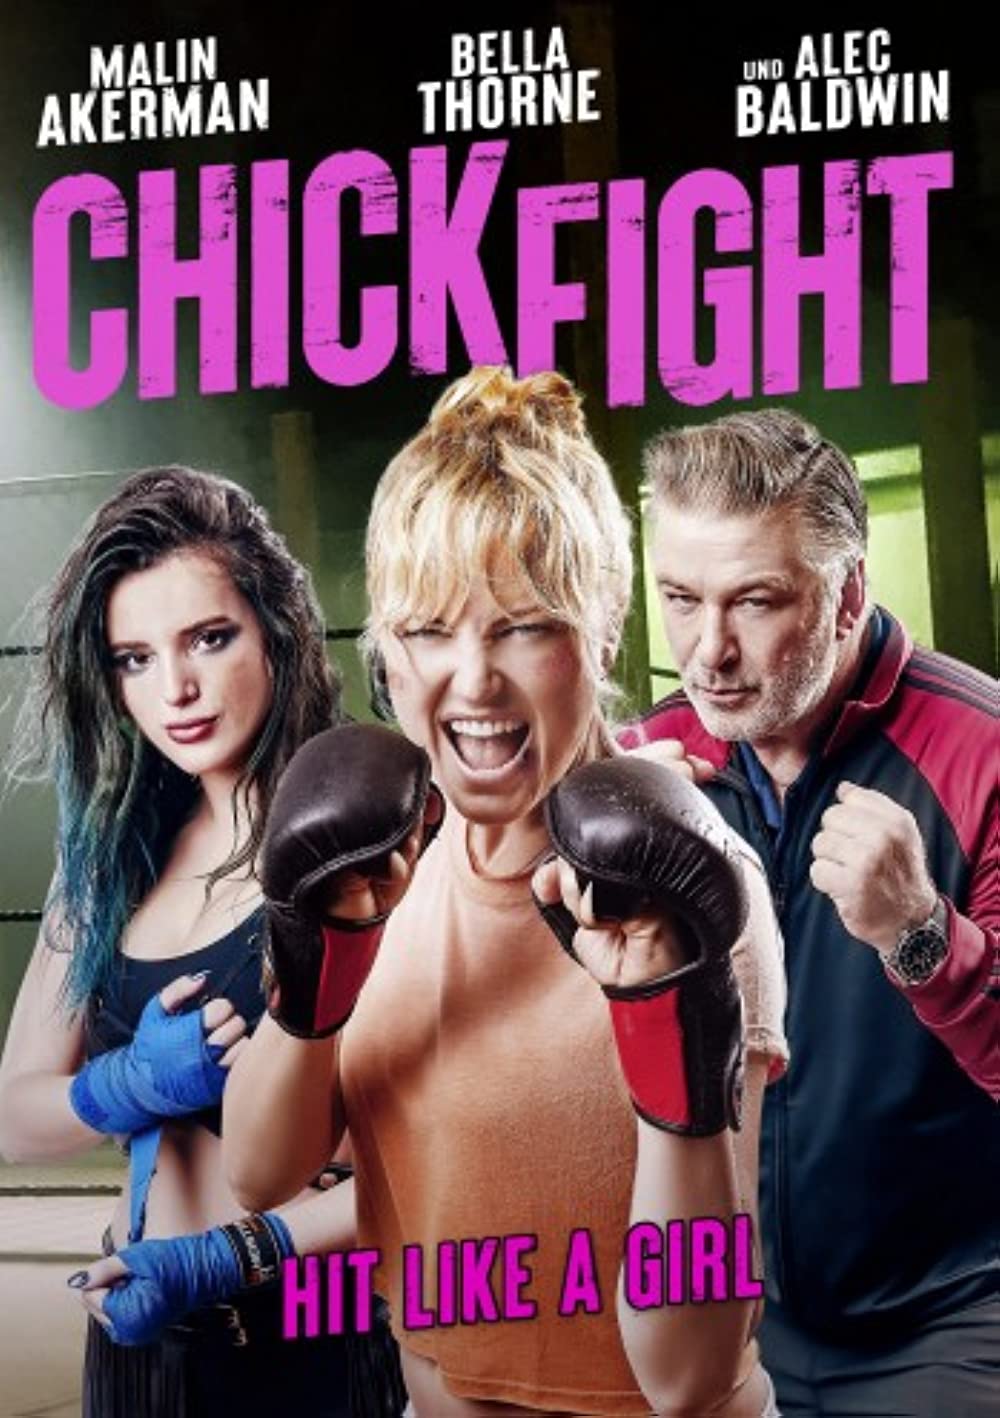 Filmbeschreibung zu Chick Fight